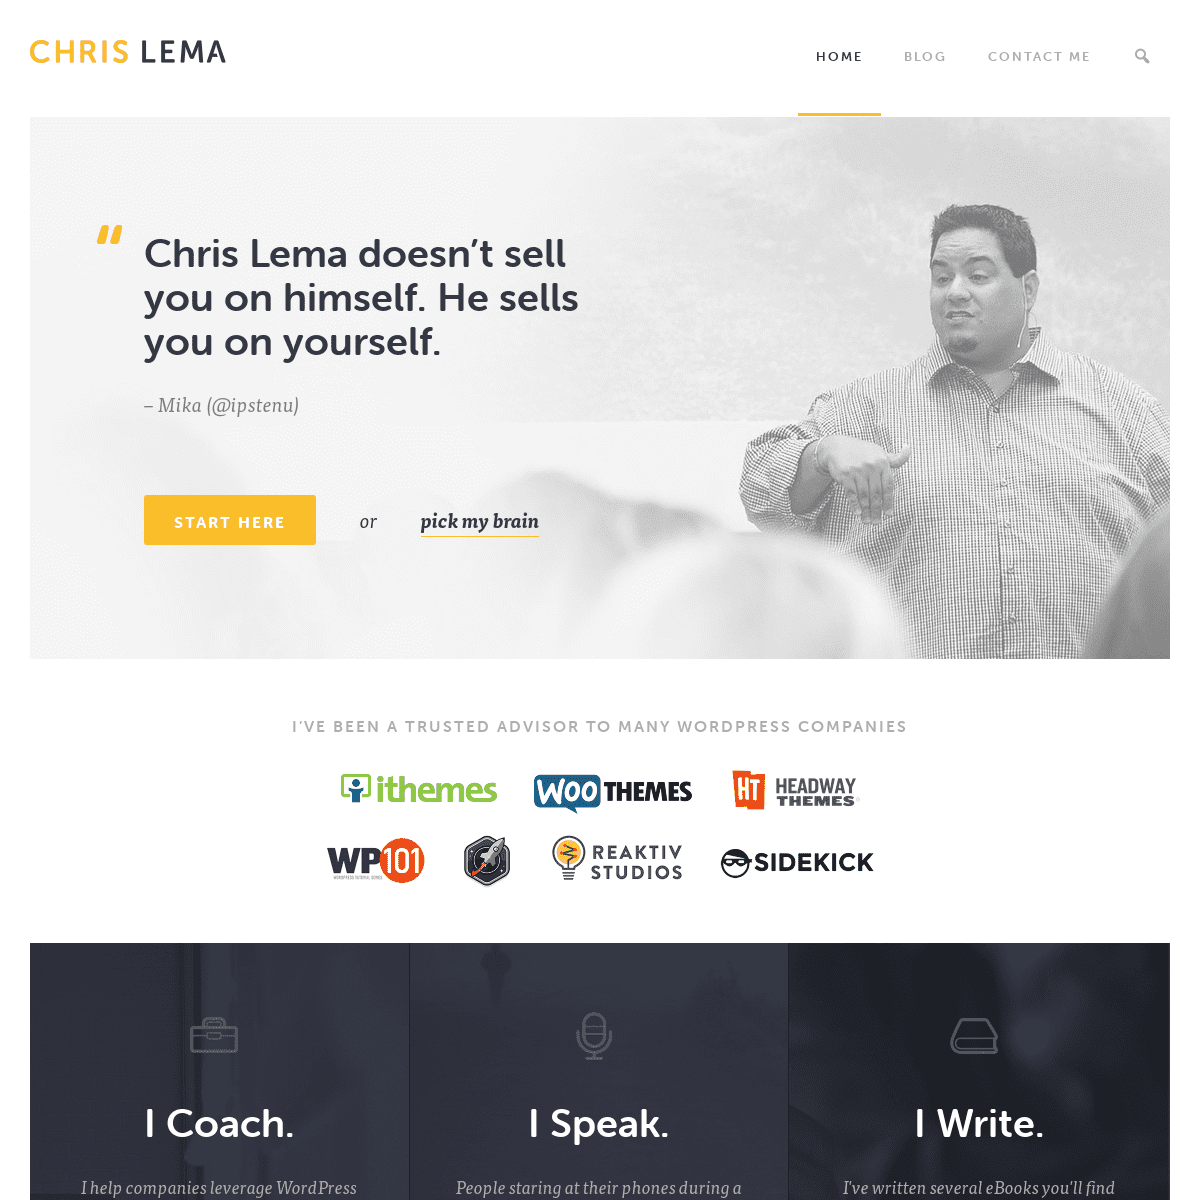 ChrisLema.com - Helping businesses leverage WordPress and helping WordPress businesses find leverage.